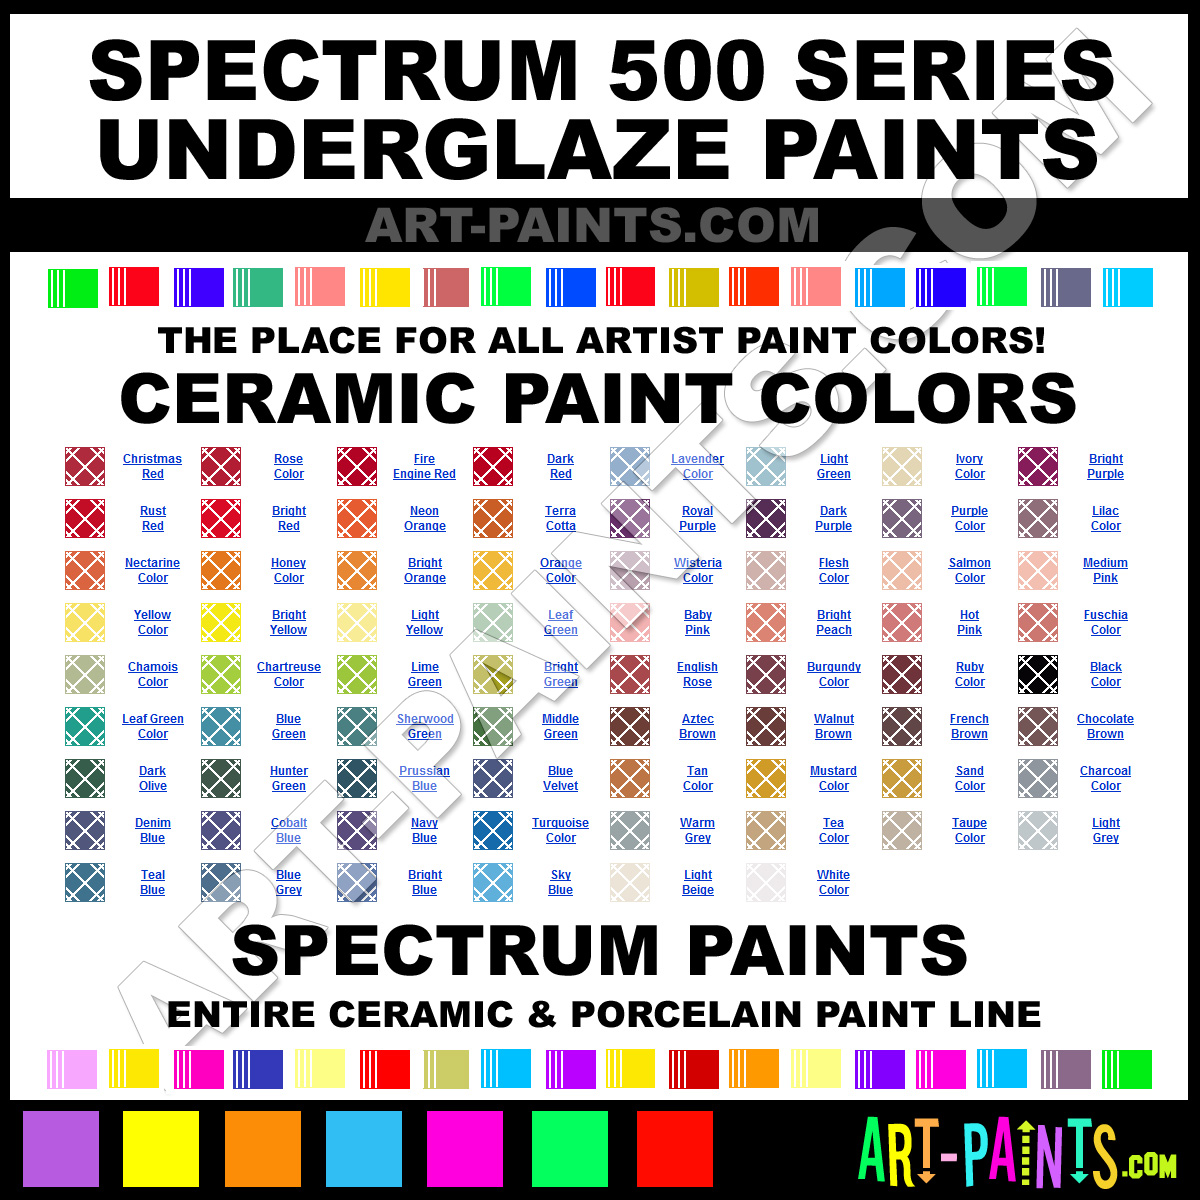 Light Beige 500 Series Underglaze Ceramic Paints - C-SP-520